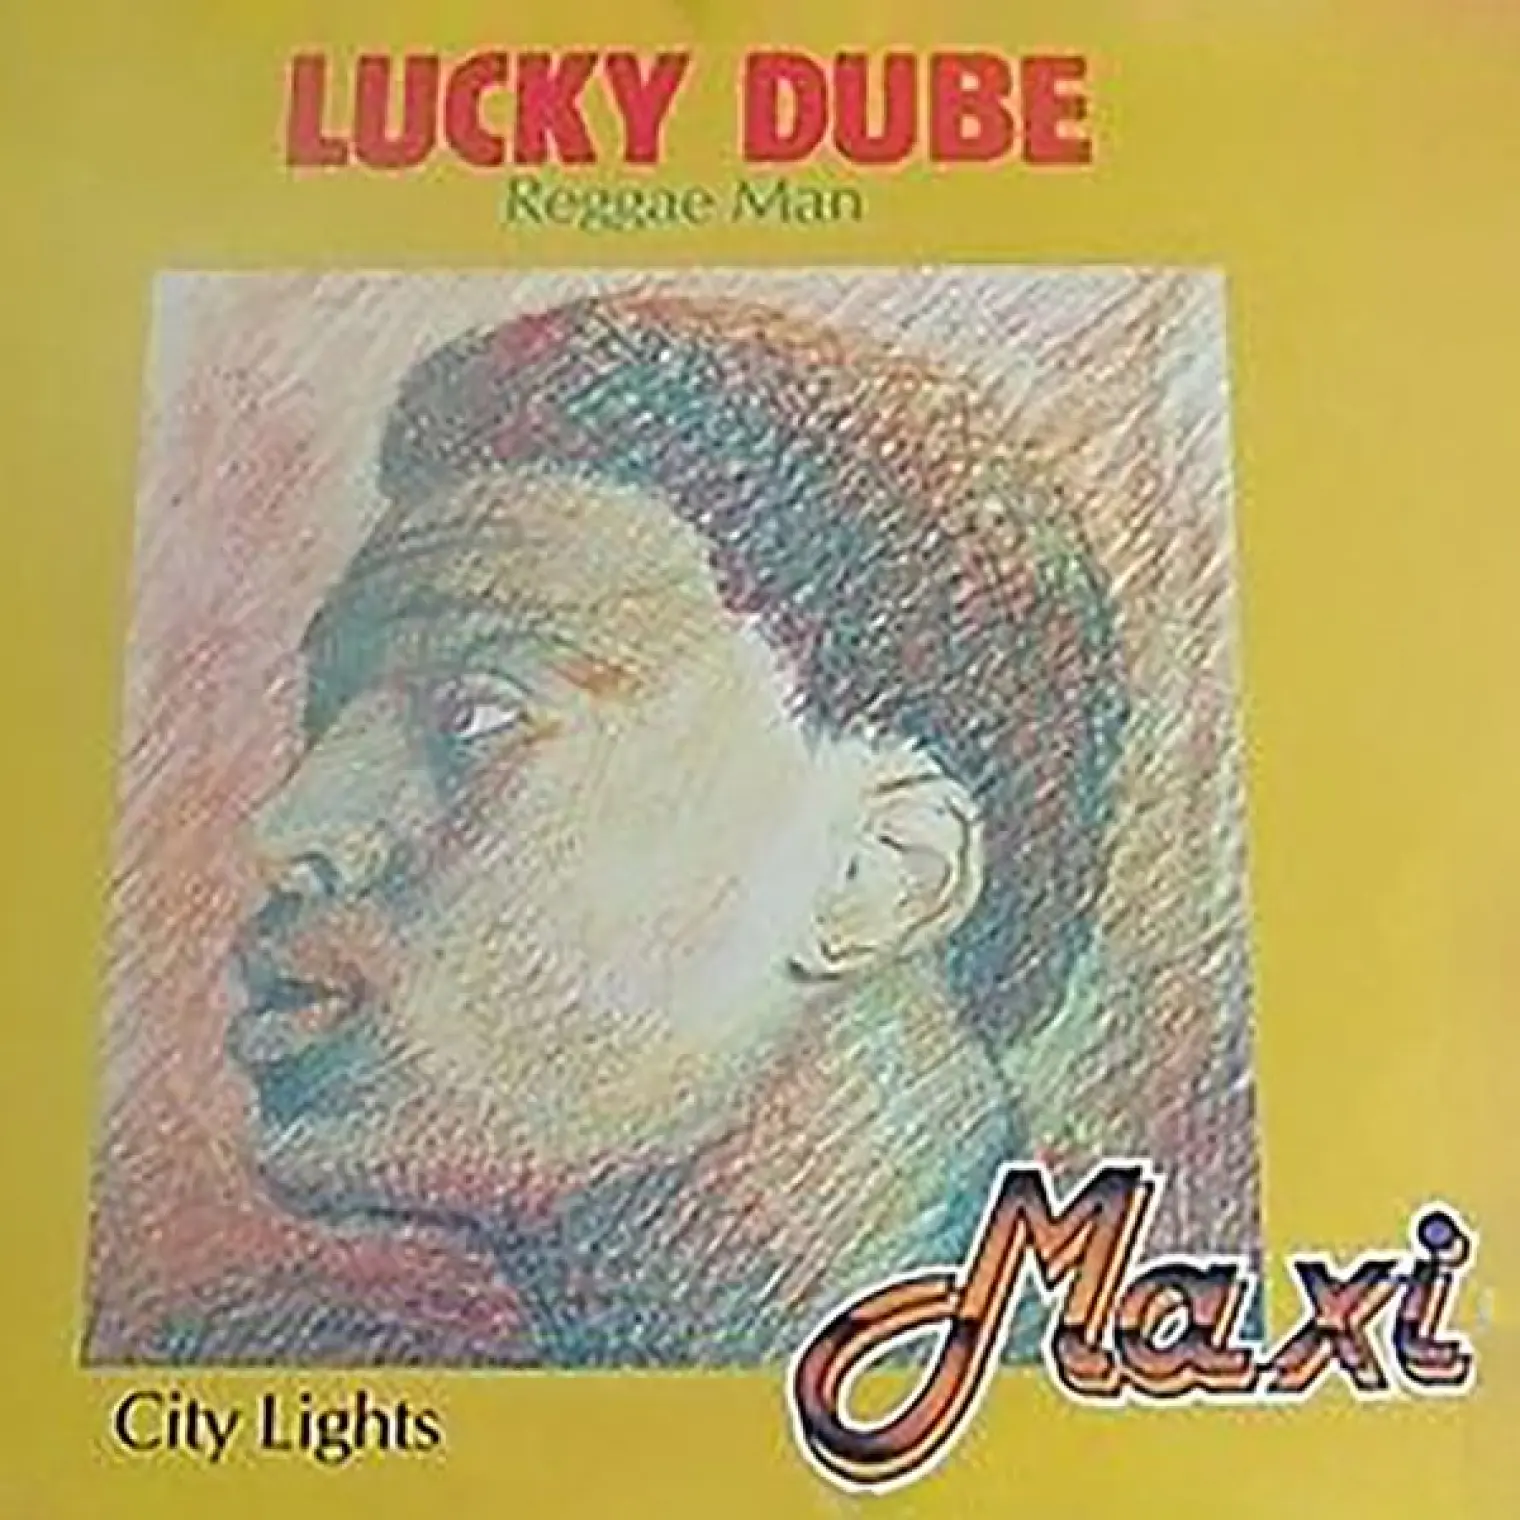 City Lights / Reggae Man (Maxi) -  Lucky Dube 